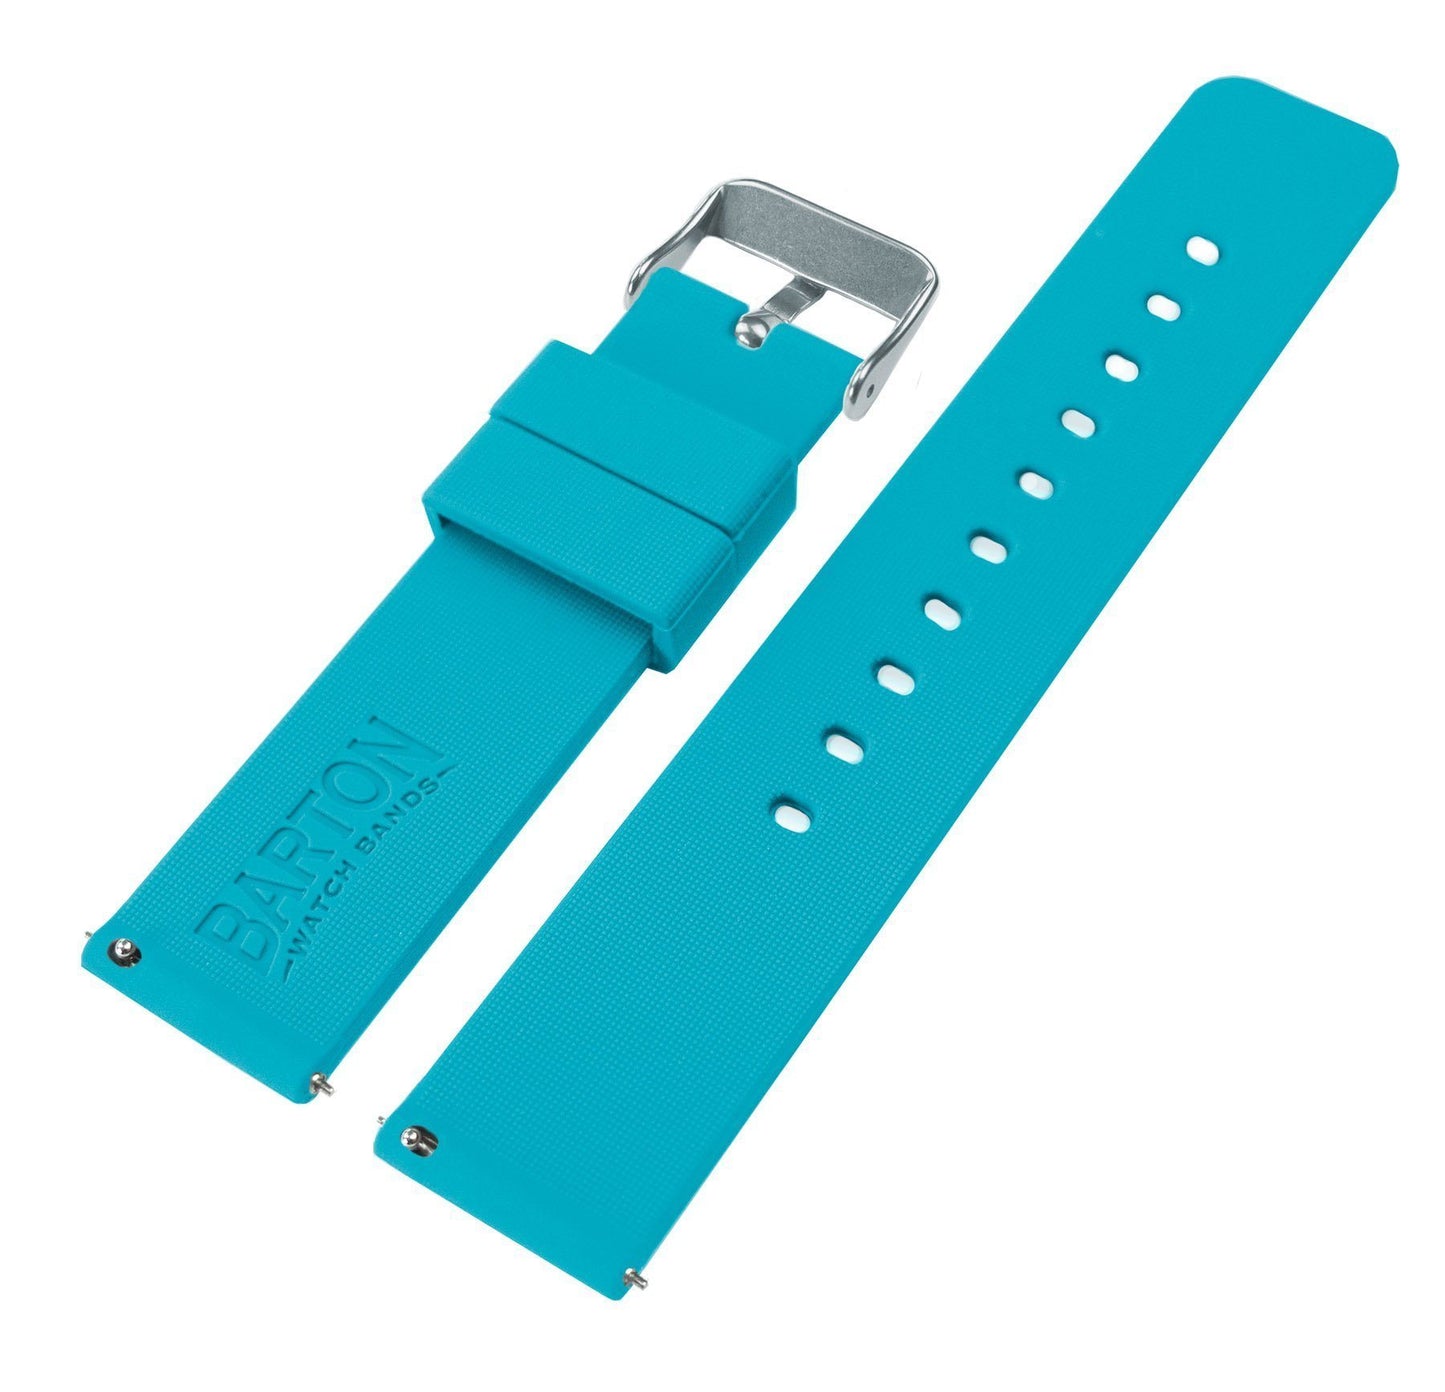 Samsung Galaxy Watch Active  | Silicone | Aqua Blue - Barton Watch Bands